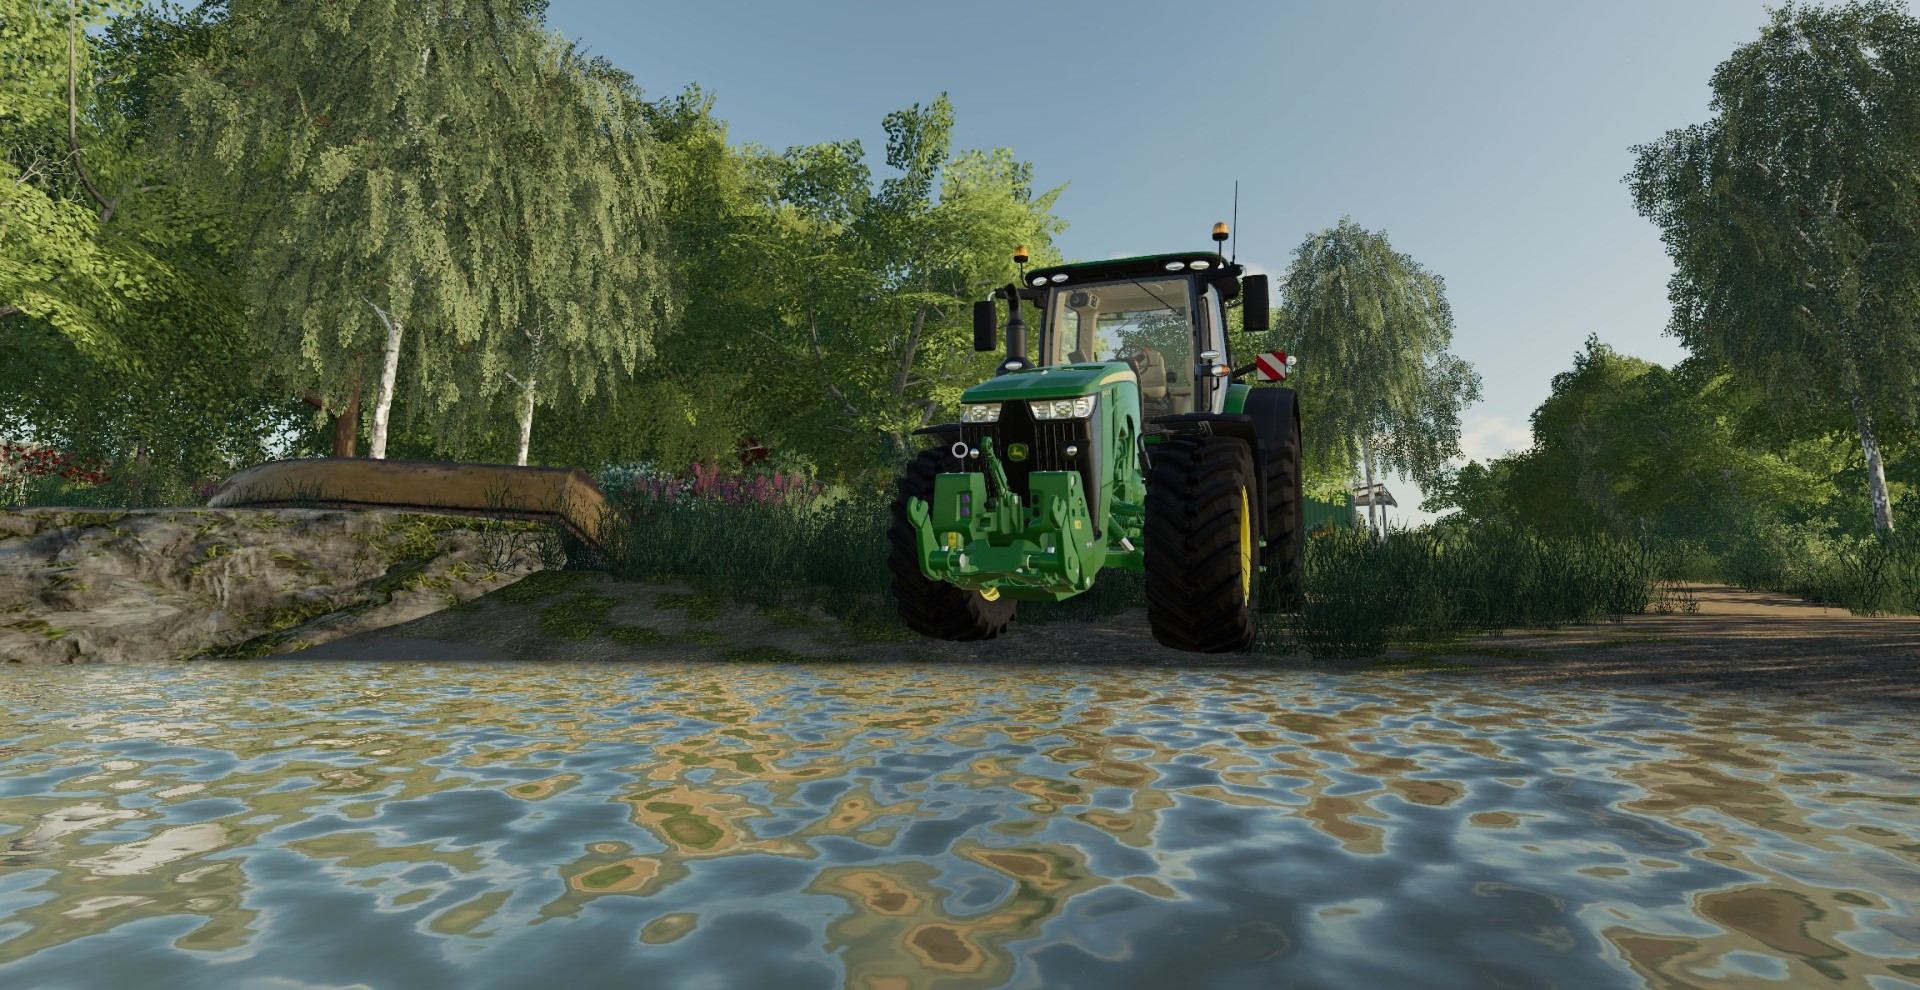 Farming Simulator 22' multiplayer will support crossplay